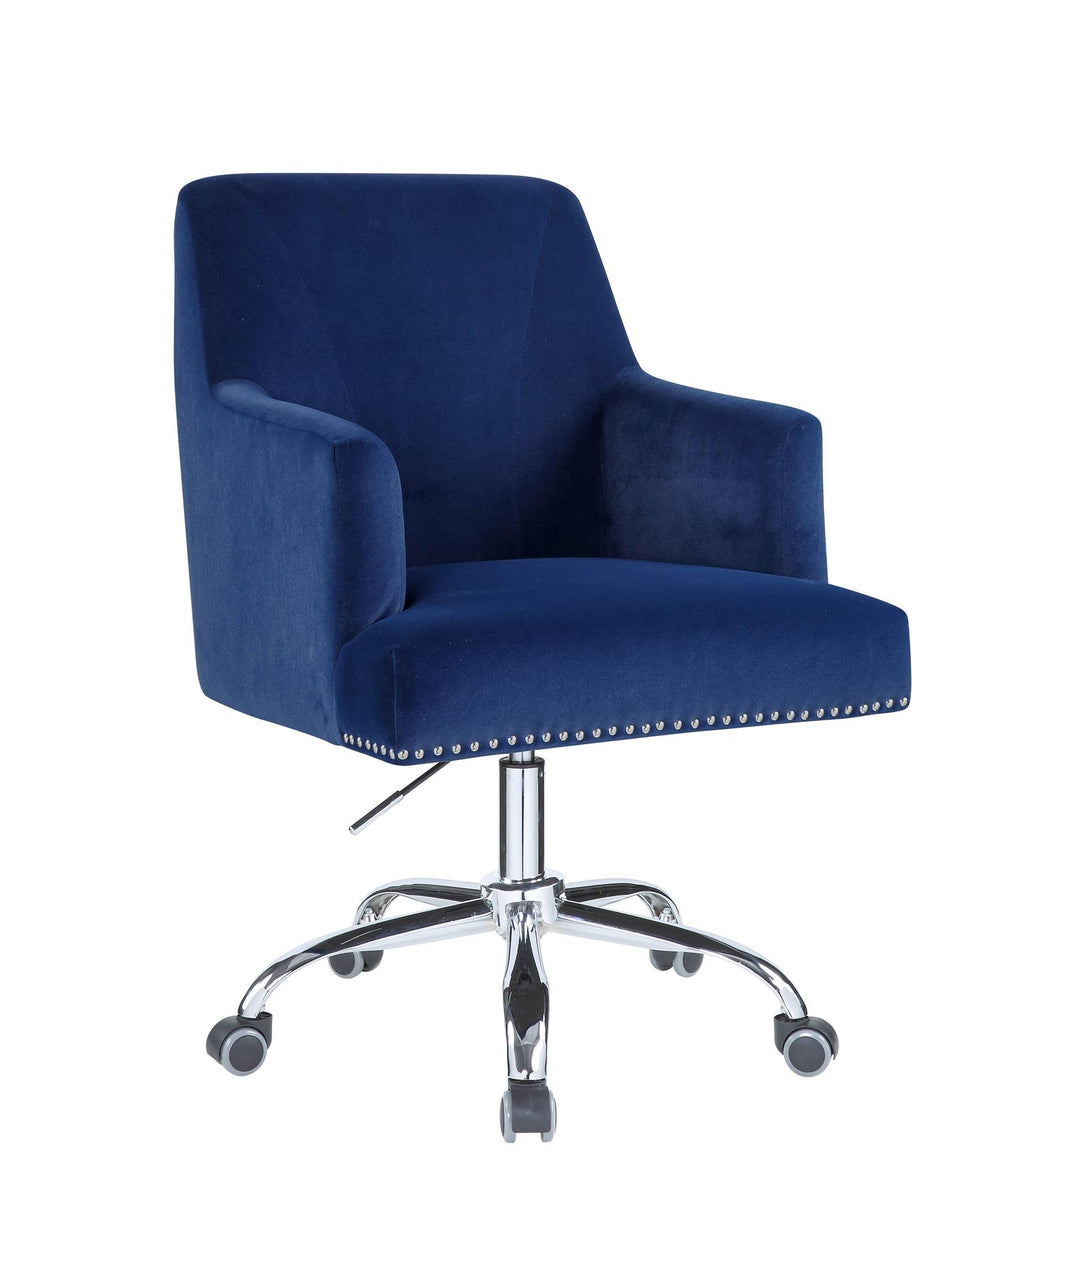 Velvet Office Chair with swivel seat - Blue